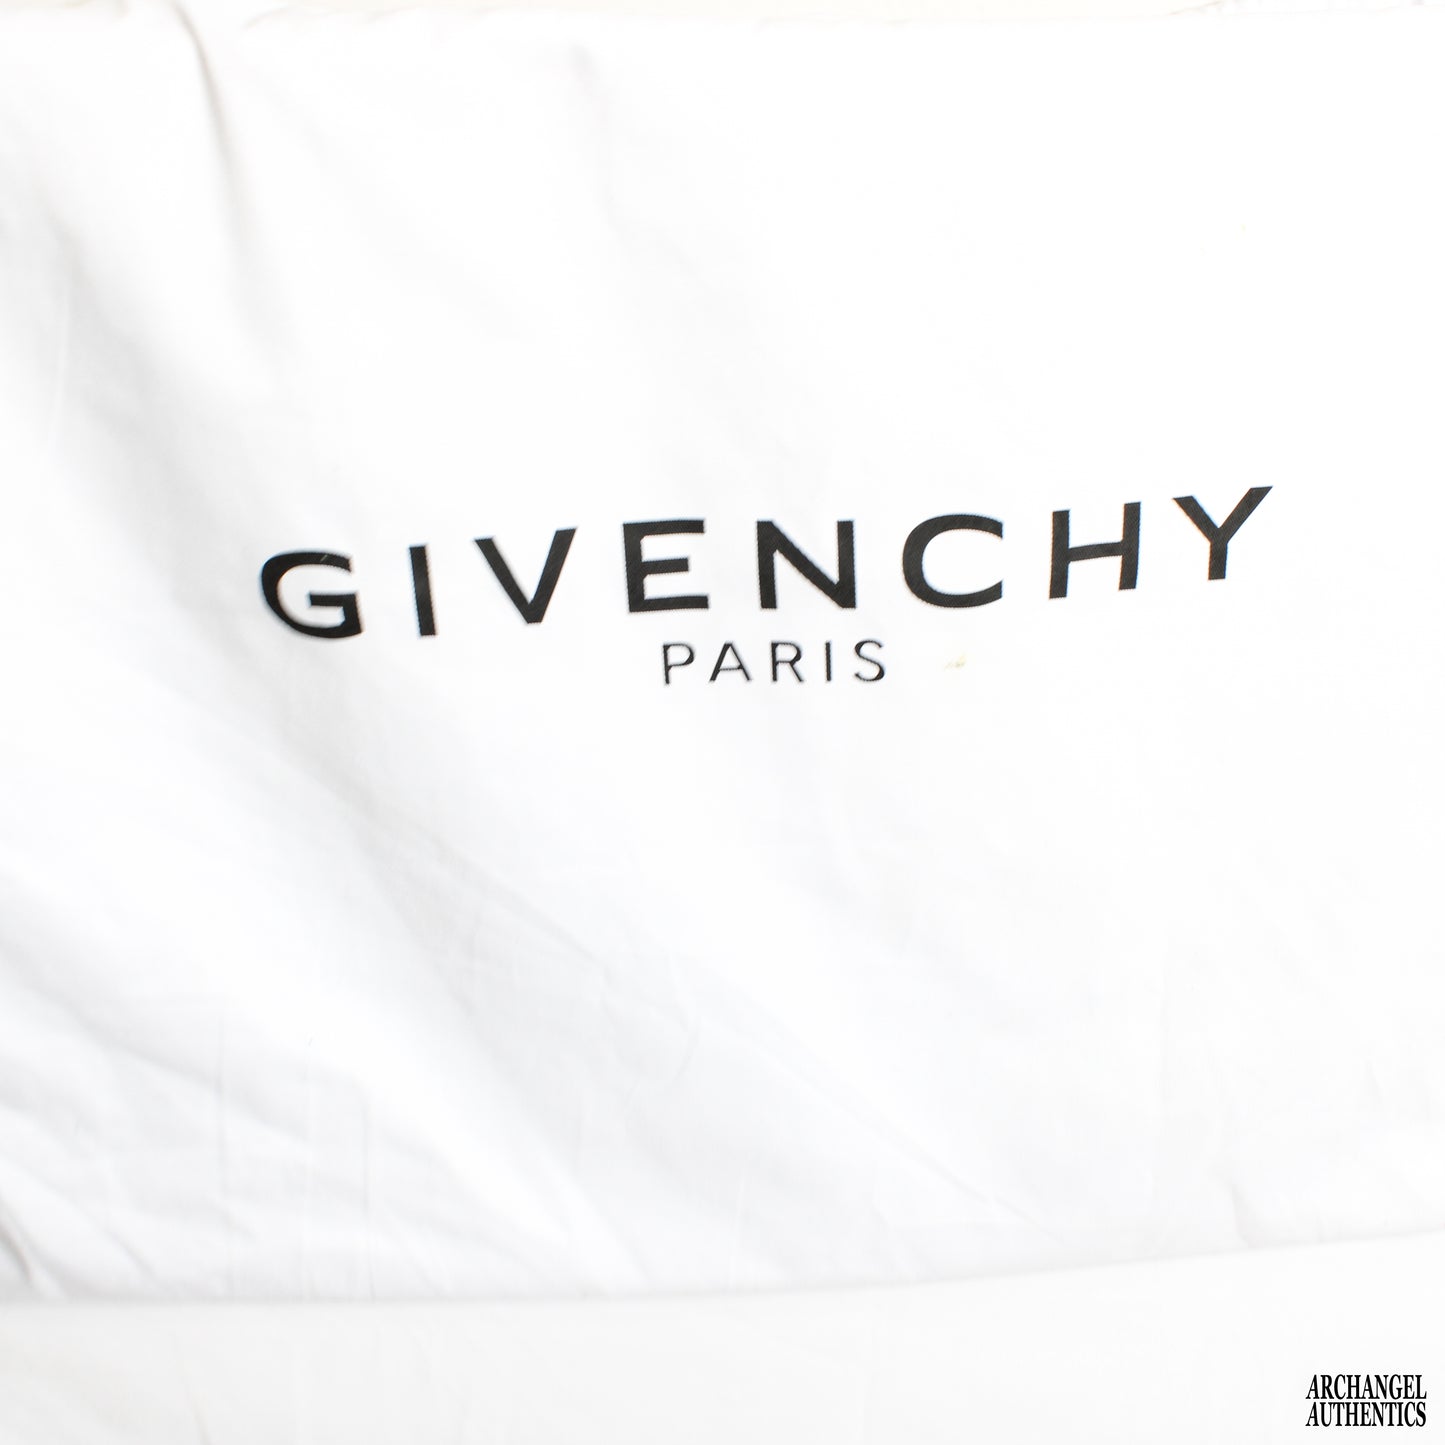 Givenchy GV Shopper Medium Bag Tote